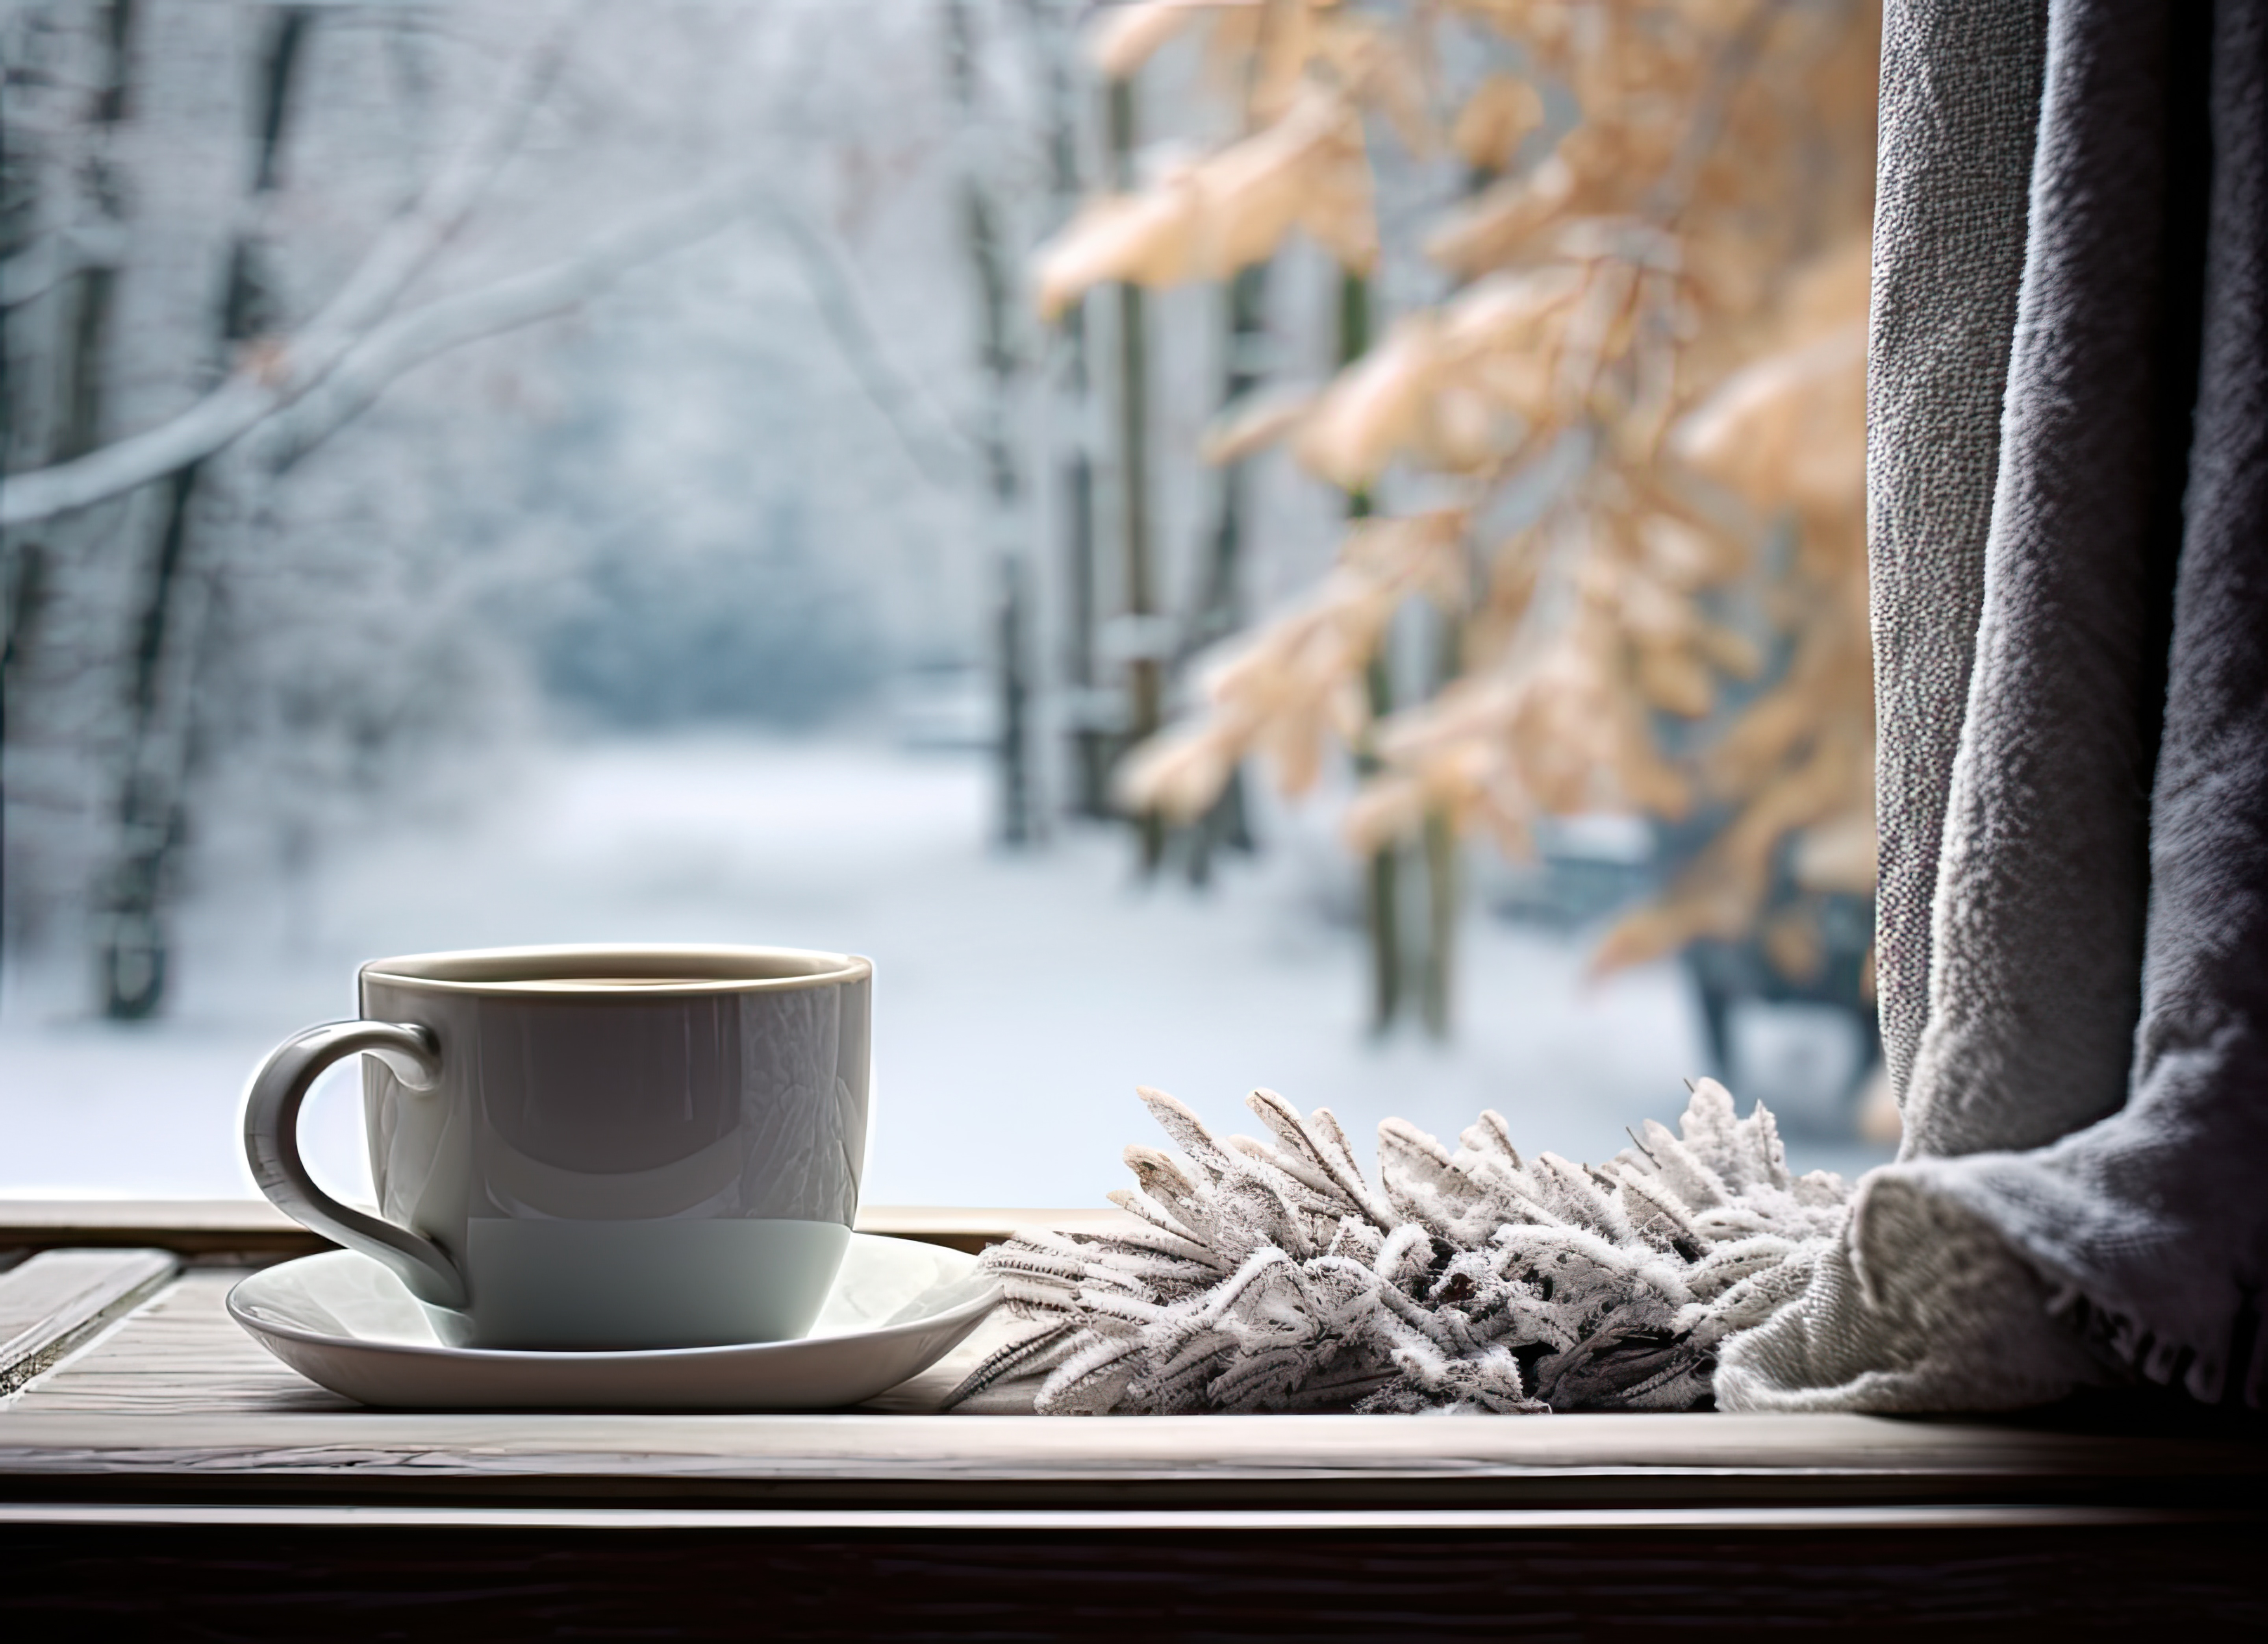 Winter Coffee